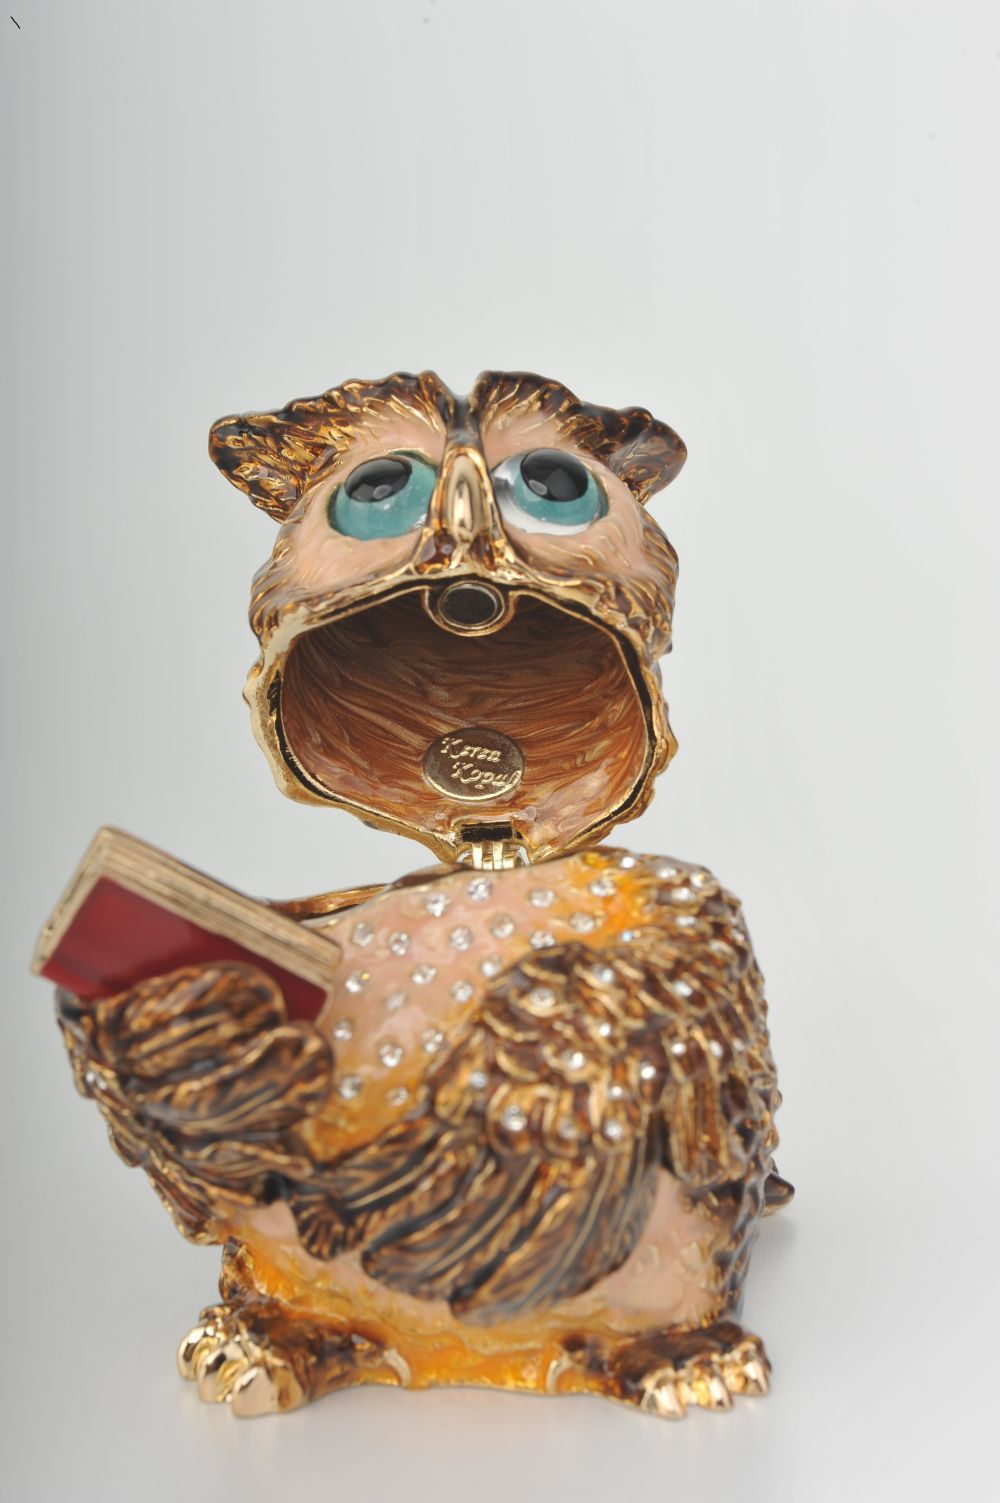 Keren Kopal Sophisticated Owl with a Book  87.75